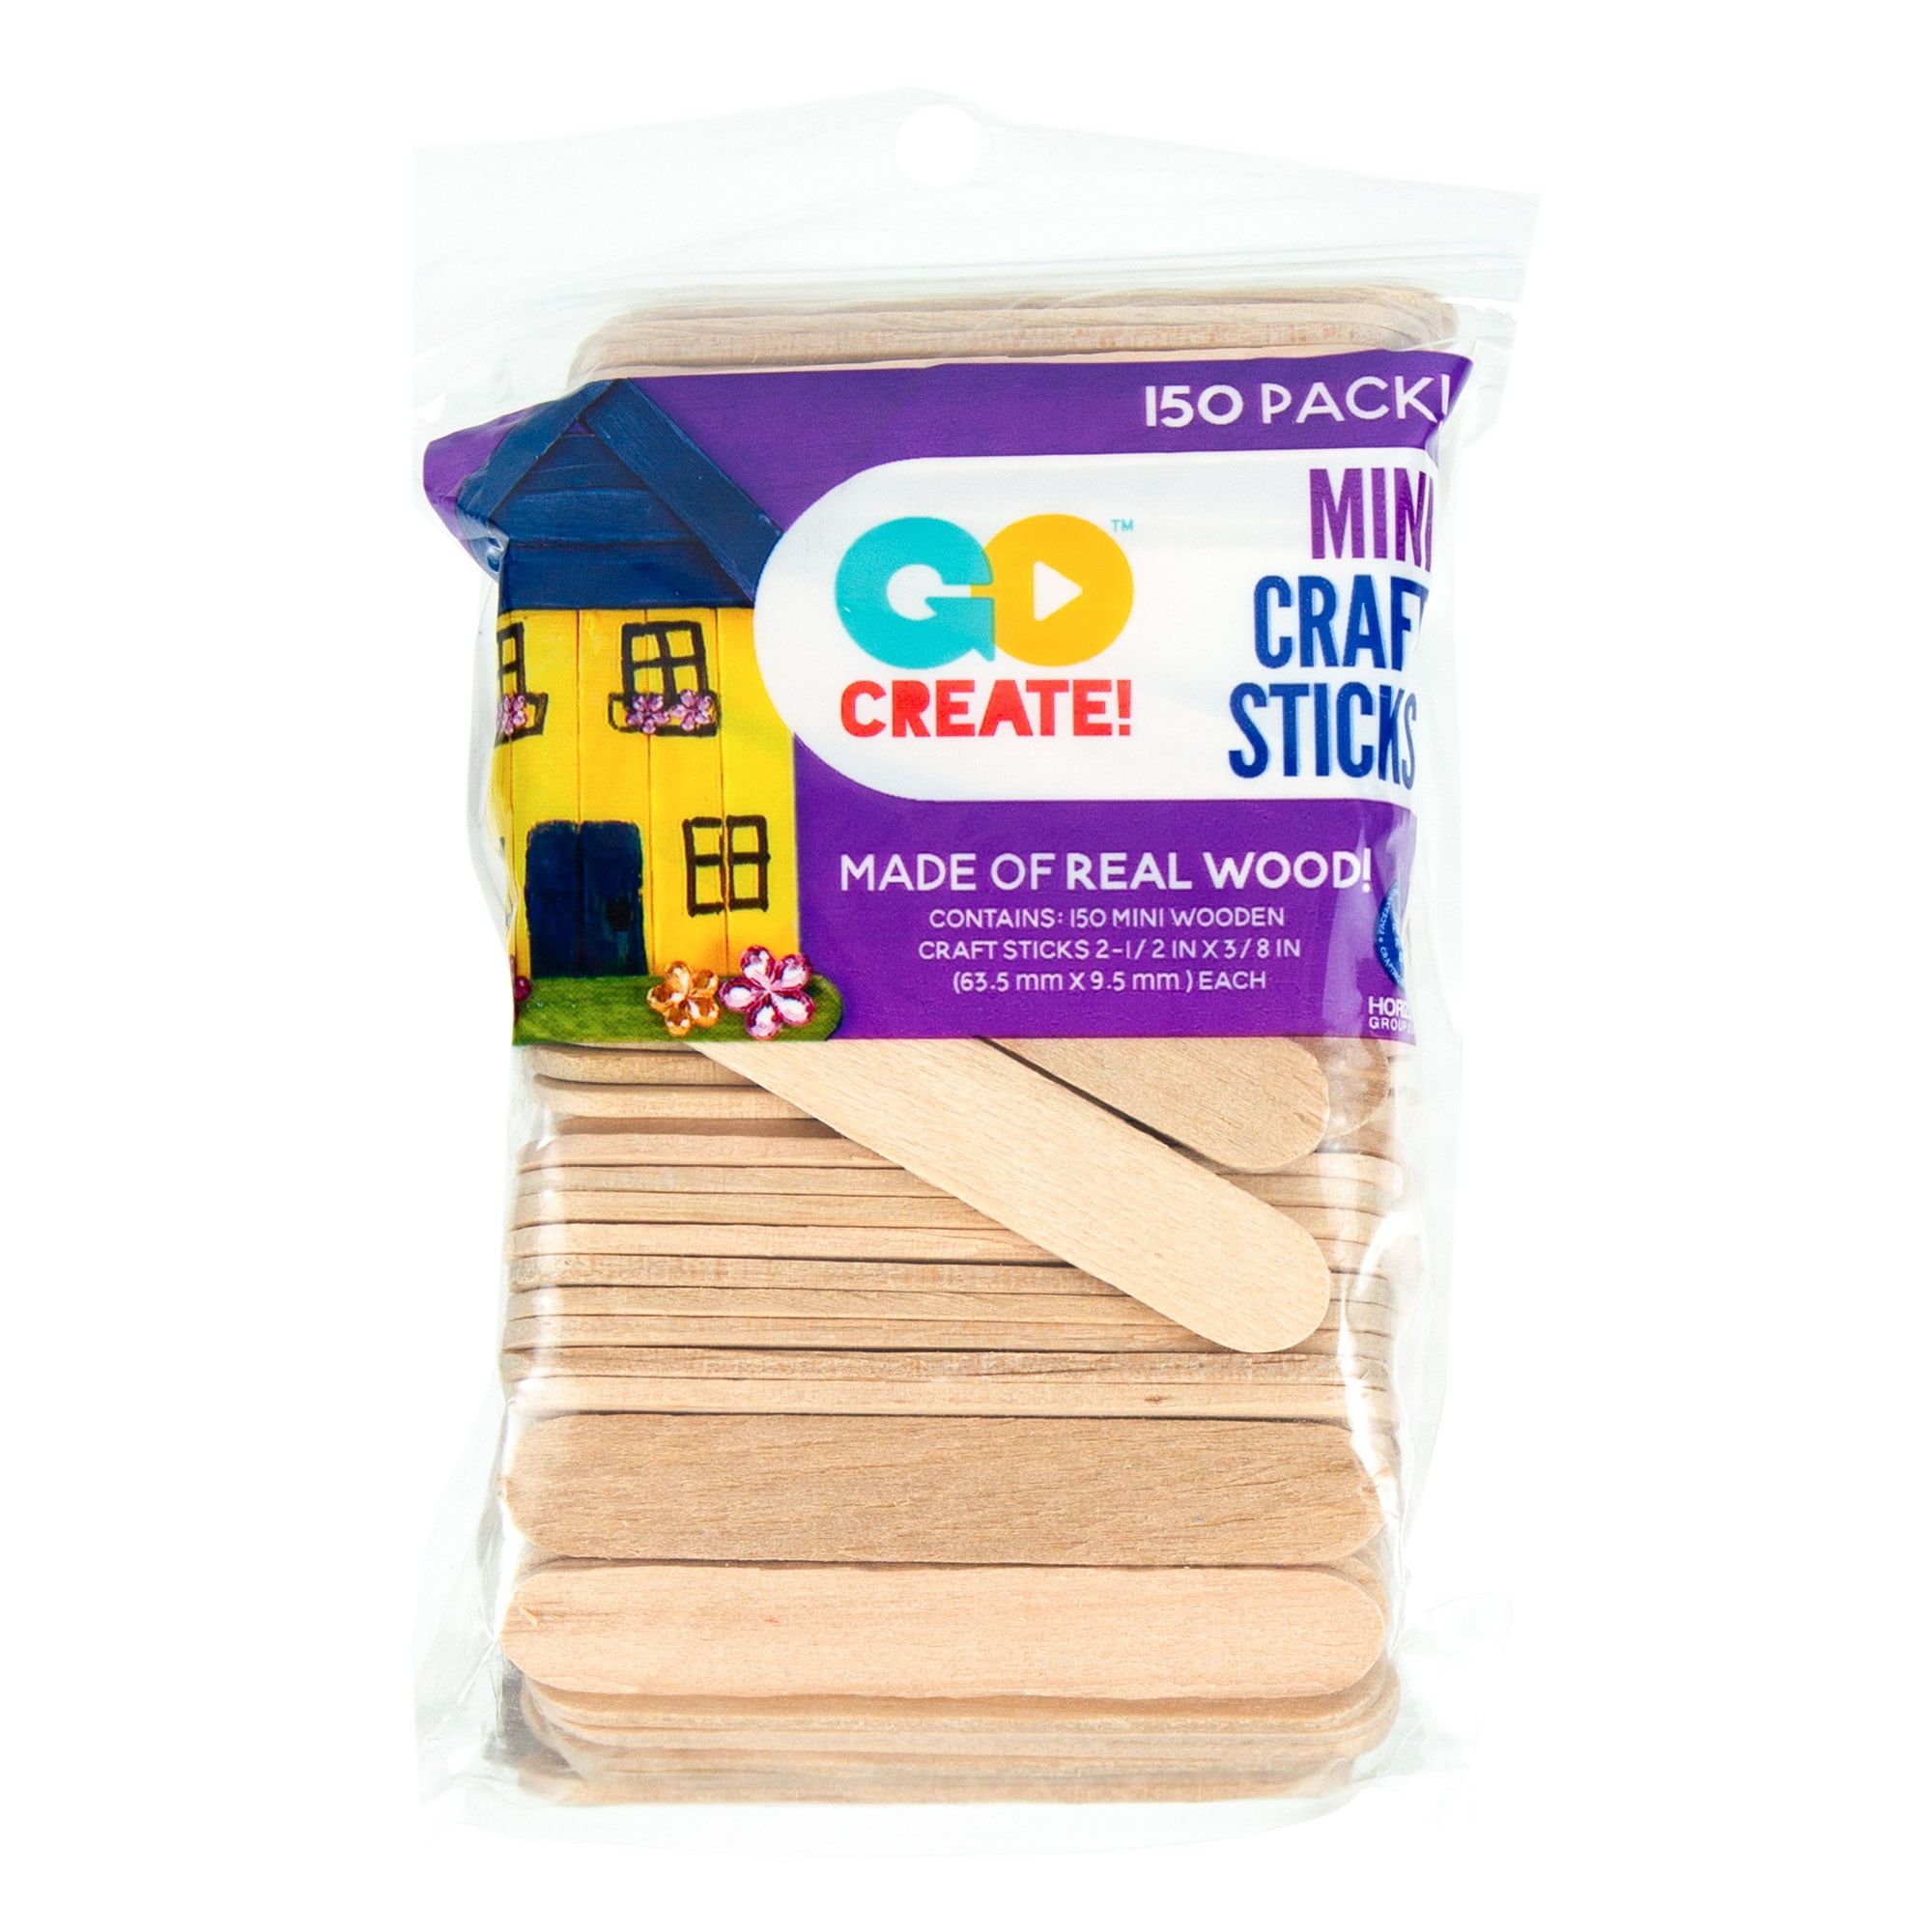 Go Create Mini Wood Craft Sticks, 150-Pack Small Wood Craft Sticks